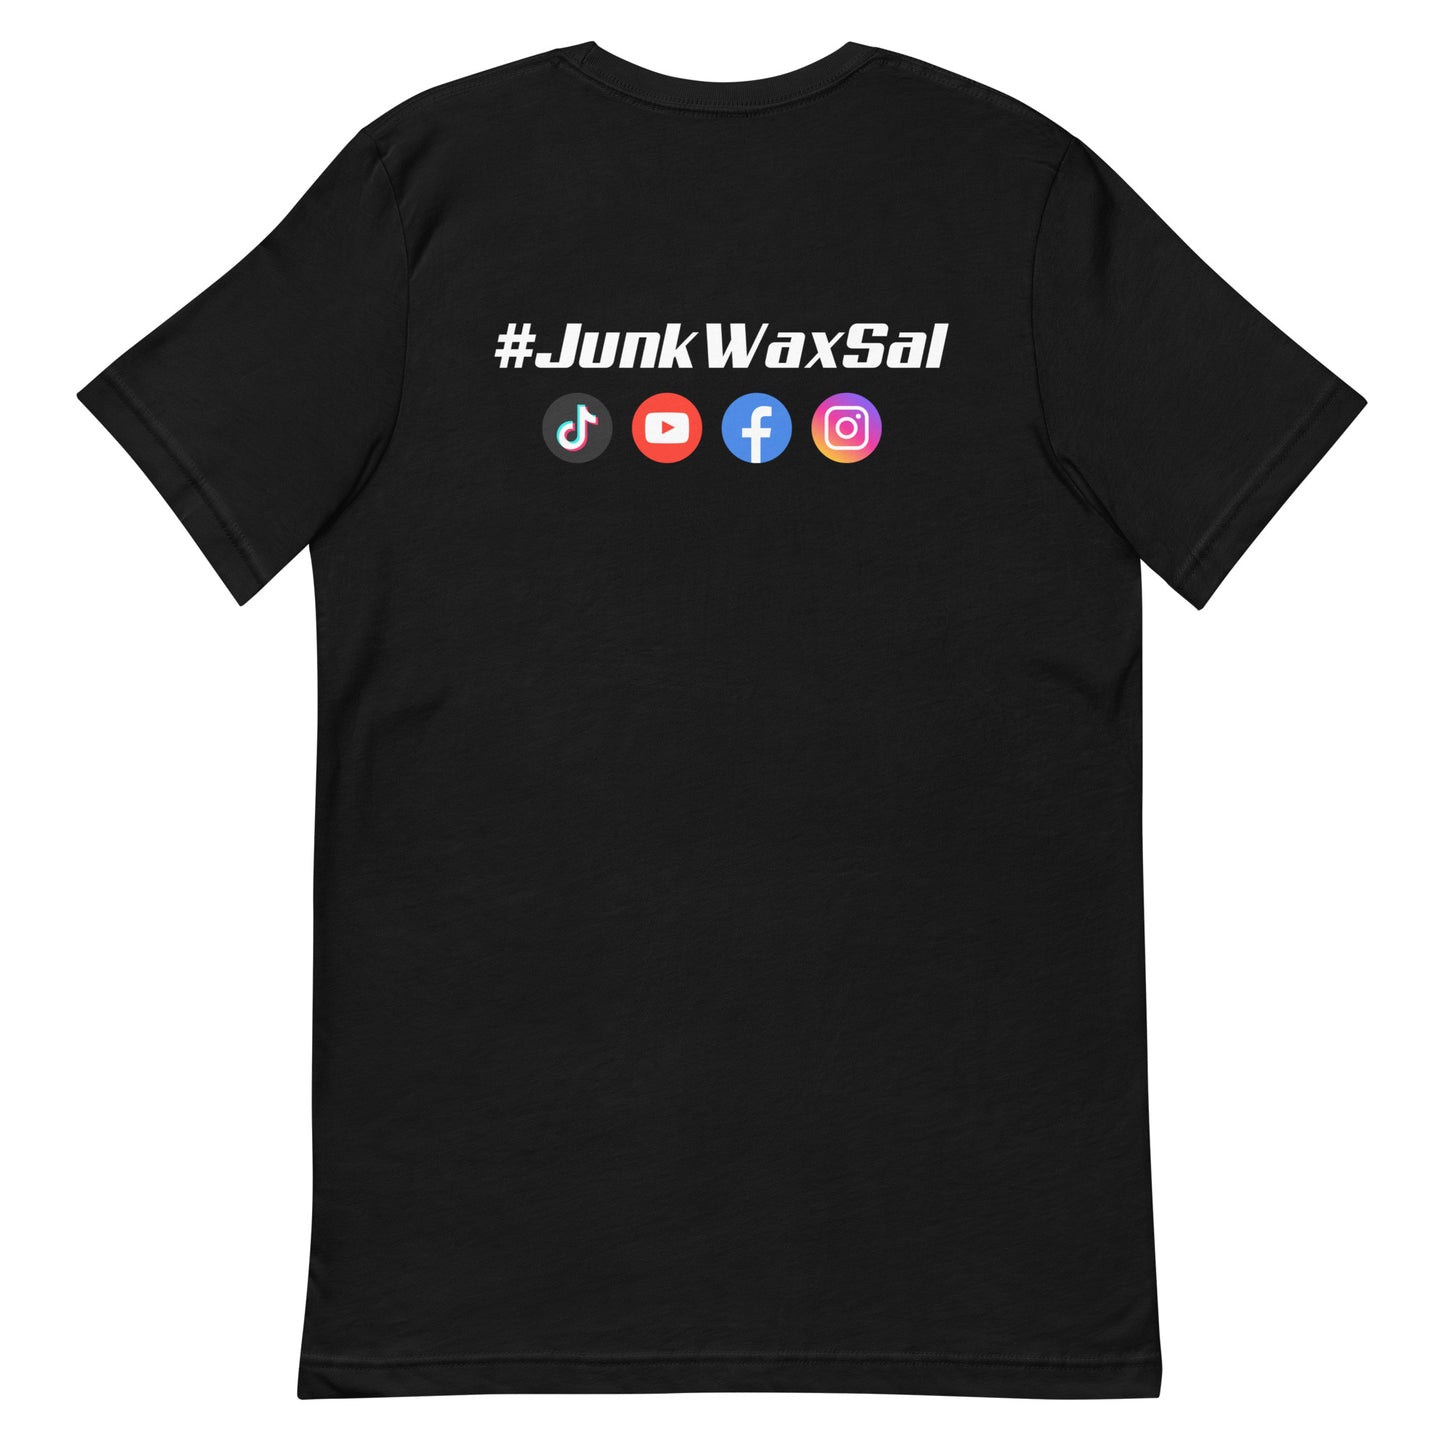 Junk Wax Sal - Oooh Checklist - Unisex t-shirt